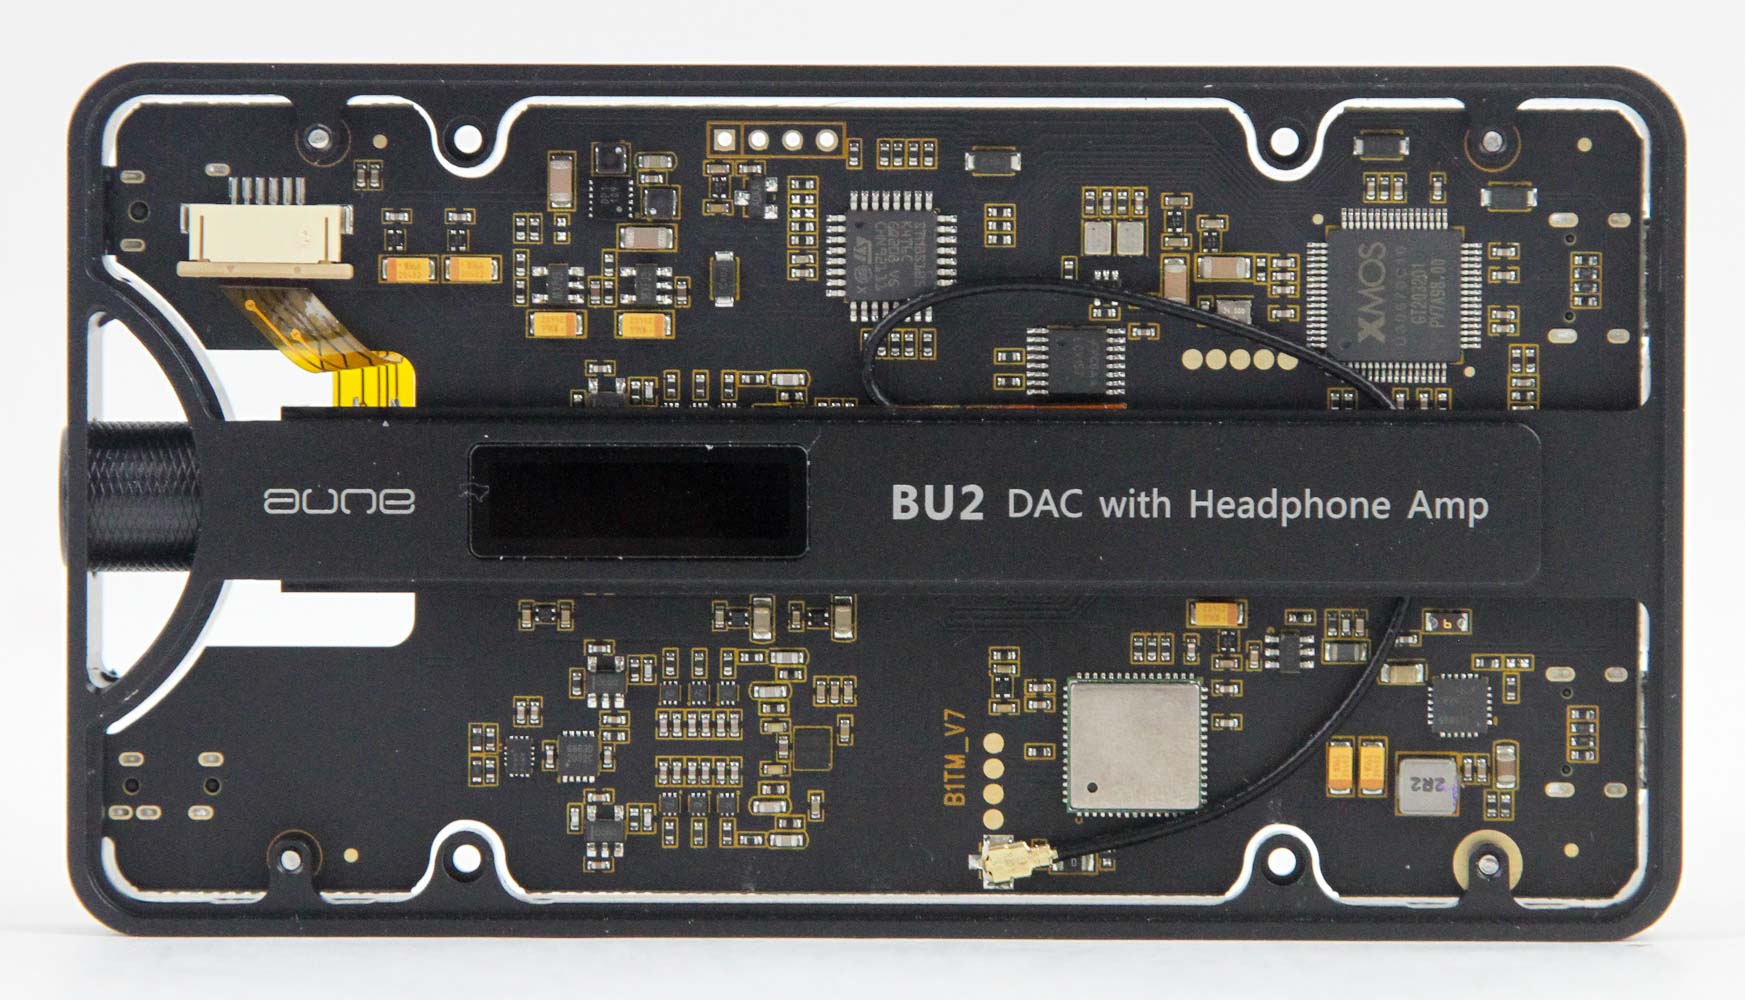 Quick Look: aune BU2 Portable Bluetooth DAC/Amplifier | TechPowerUp